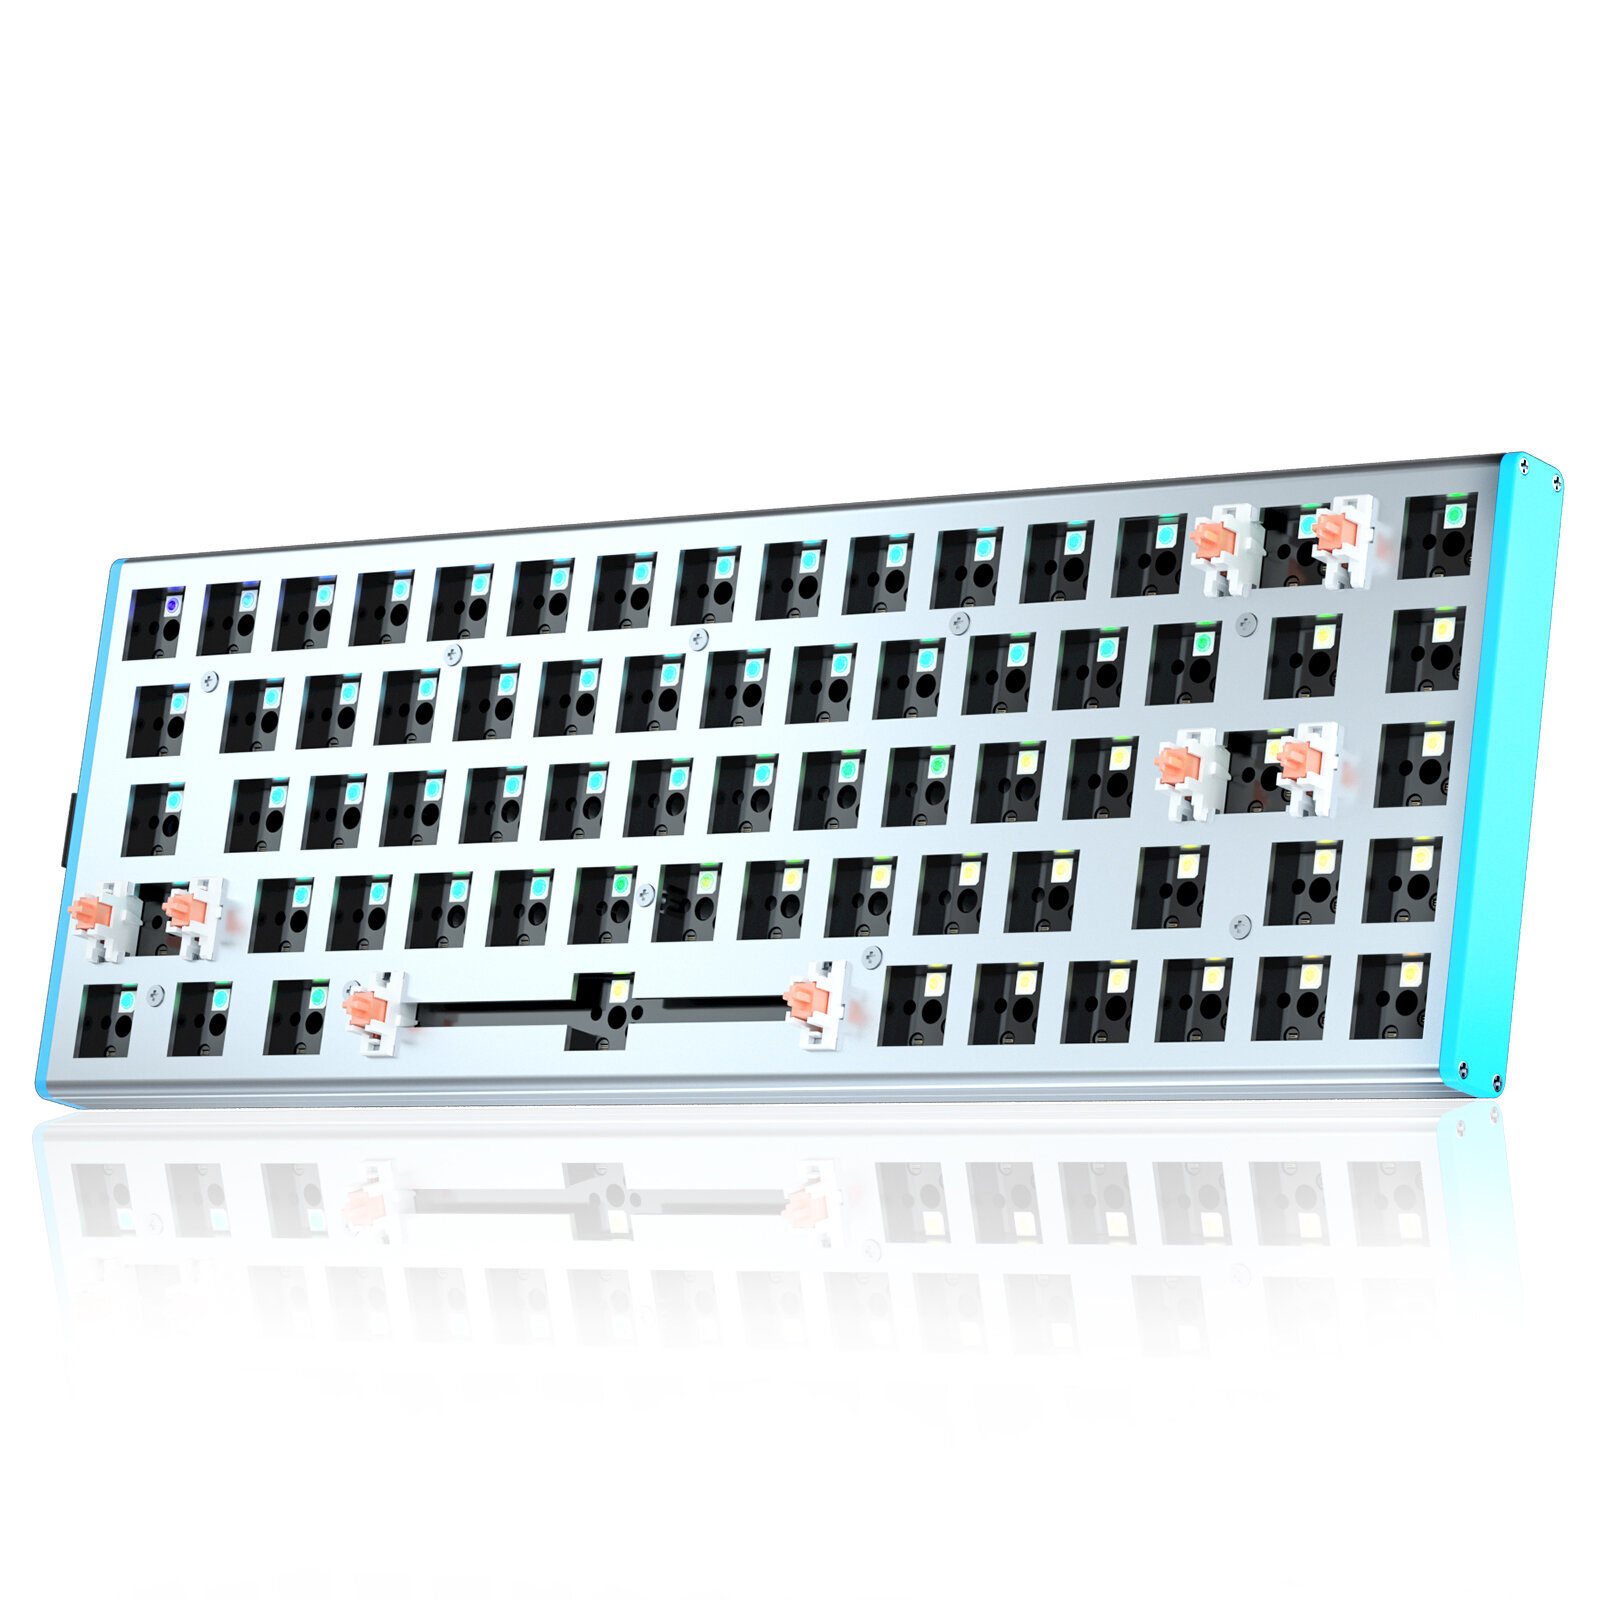 

AULA F3368 Keyboard DIY Kit Hotswap Wired/Bluetooth/2.4G 68 Keys RGB Backlit keyboard For MAC IOS Android Windows